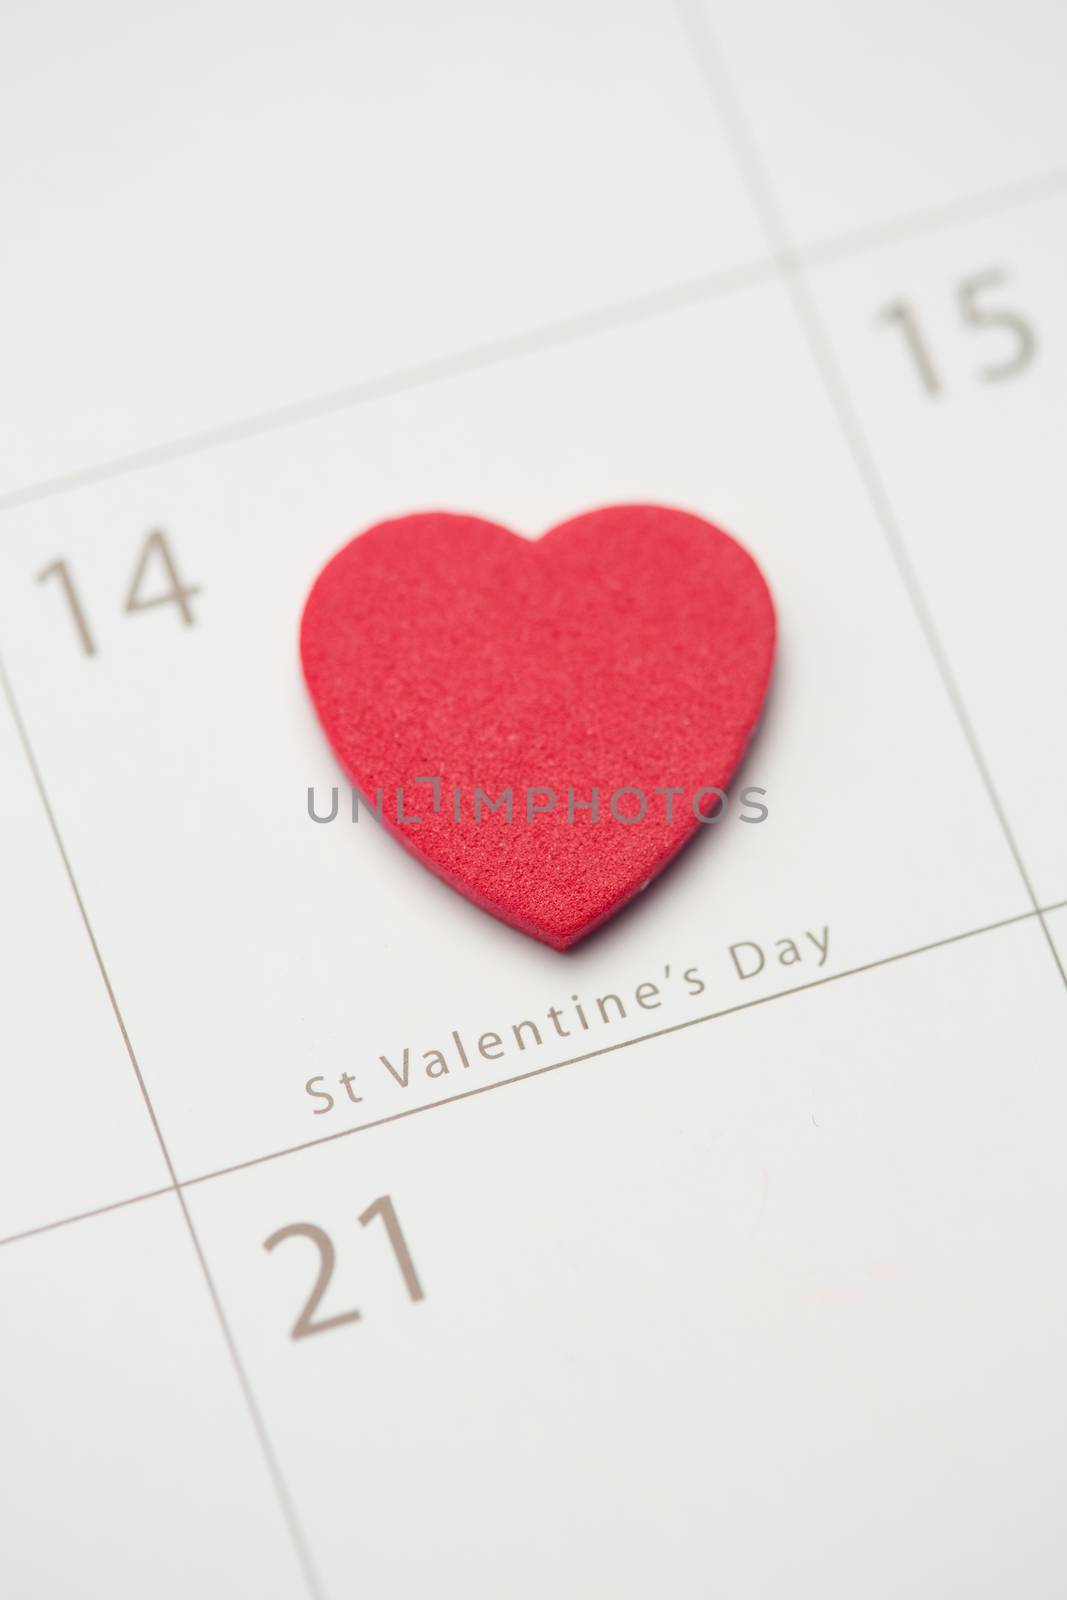 Zoom on pink heart marking valentines day by Wavebreakmedia